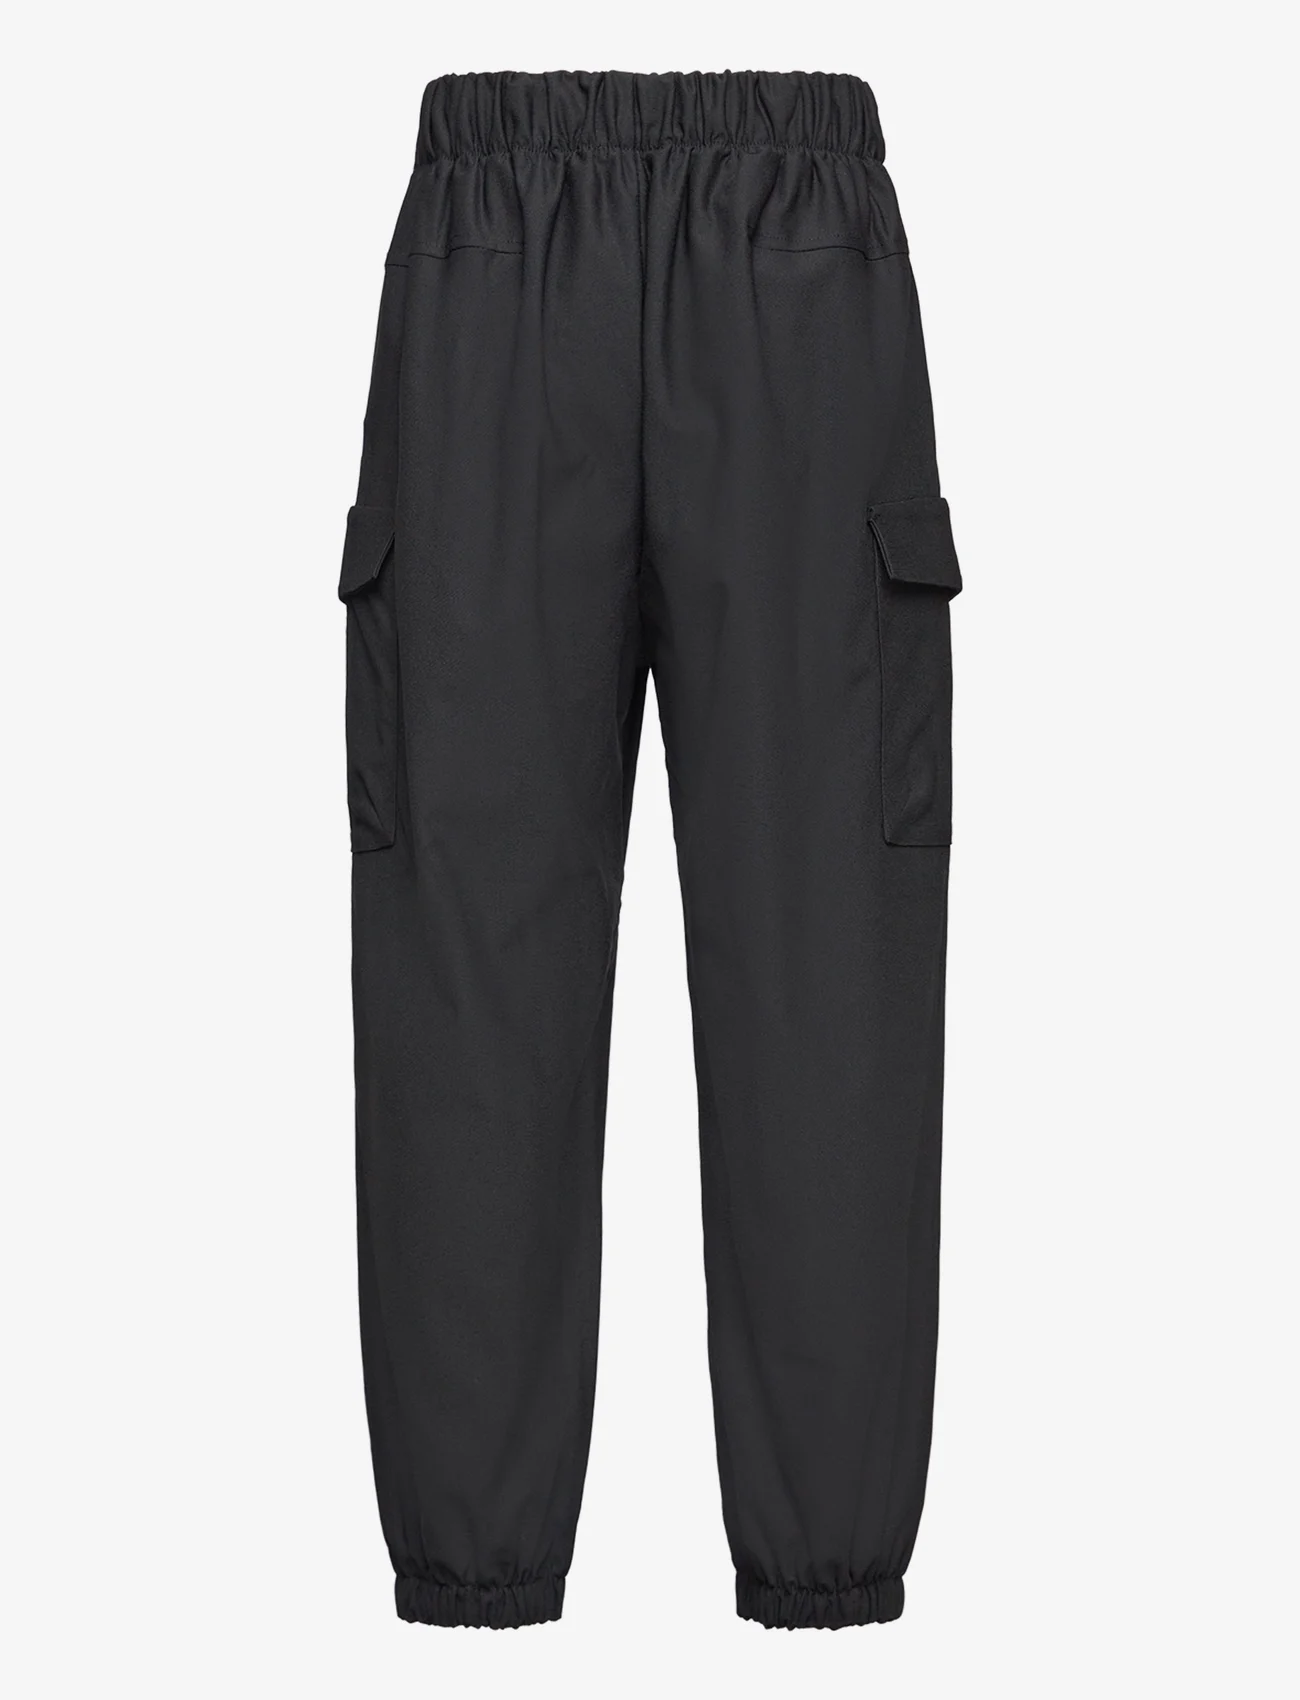 Calvin Klein - PARACHUTE DRY KNIT PANTS - trousers - ck black - 1